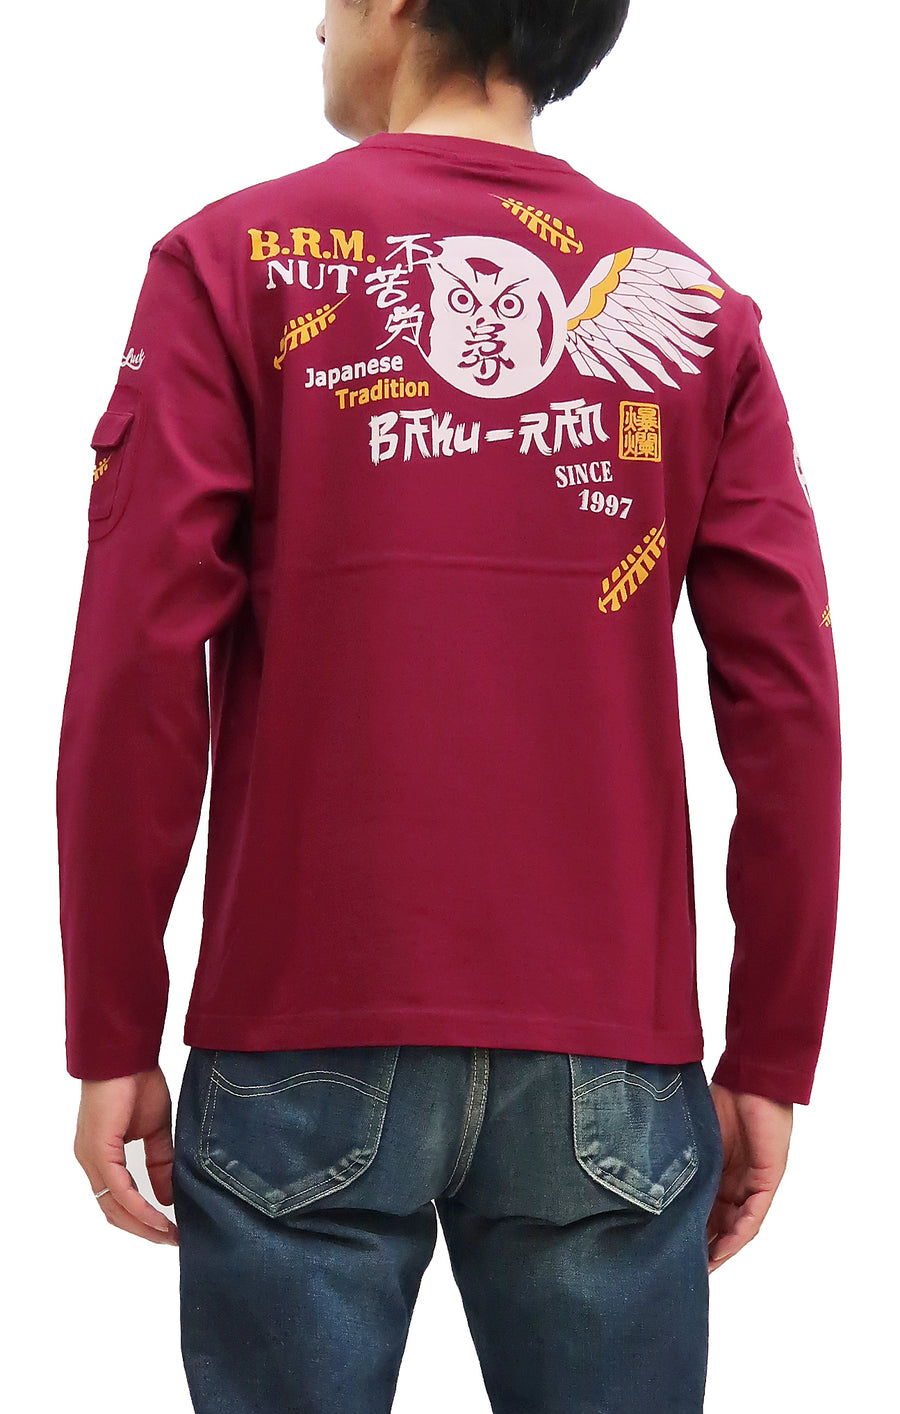 Bakuretsu-Ranman-Musme T-Shirt Men's Japanese Owl Art Graphic Long Sleeve Tee B-R-M RMLT-325 Wine-Red